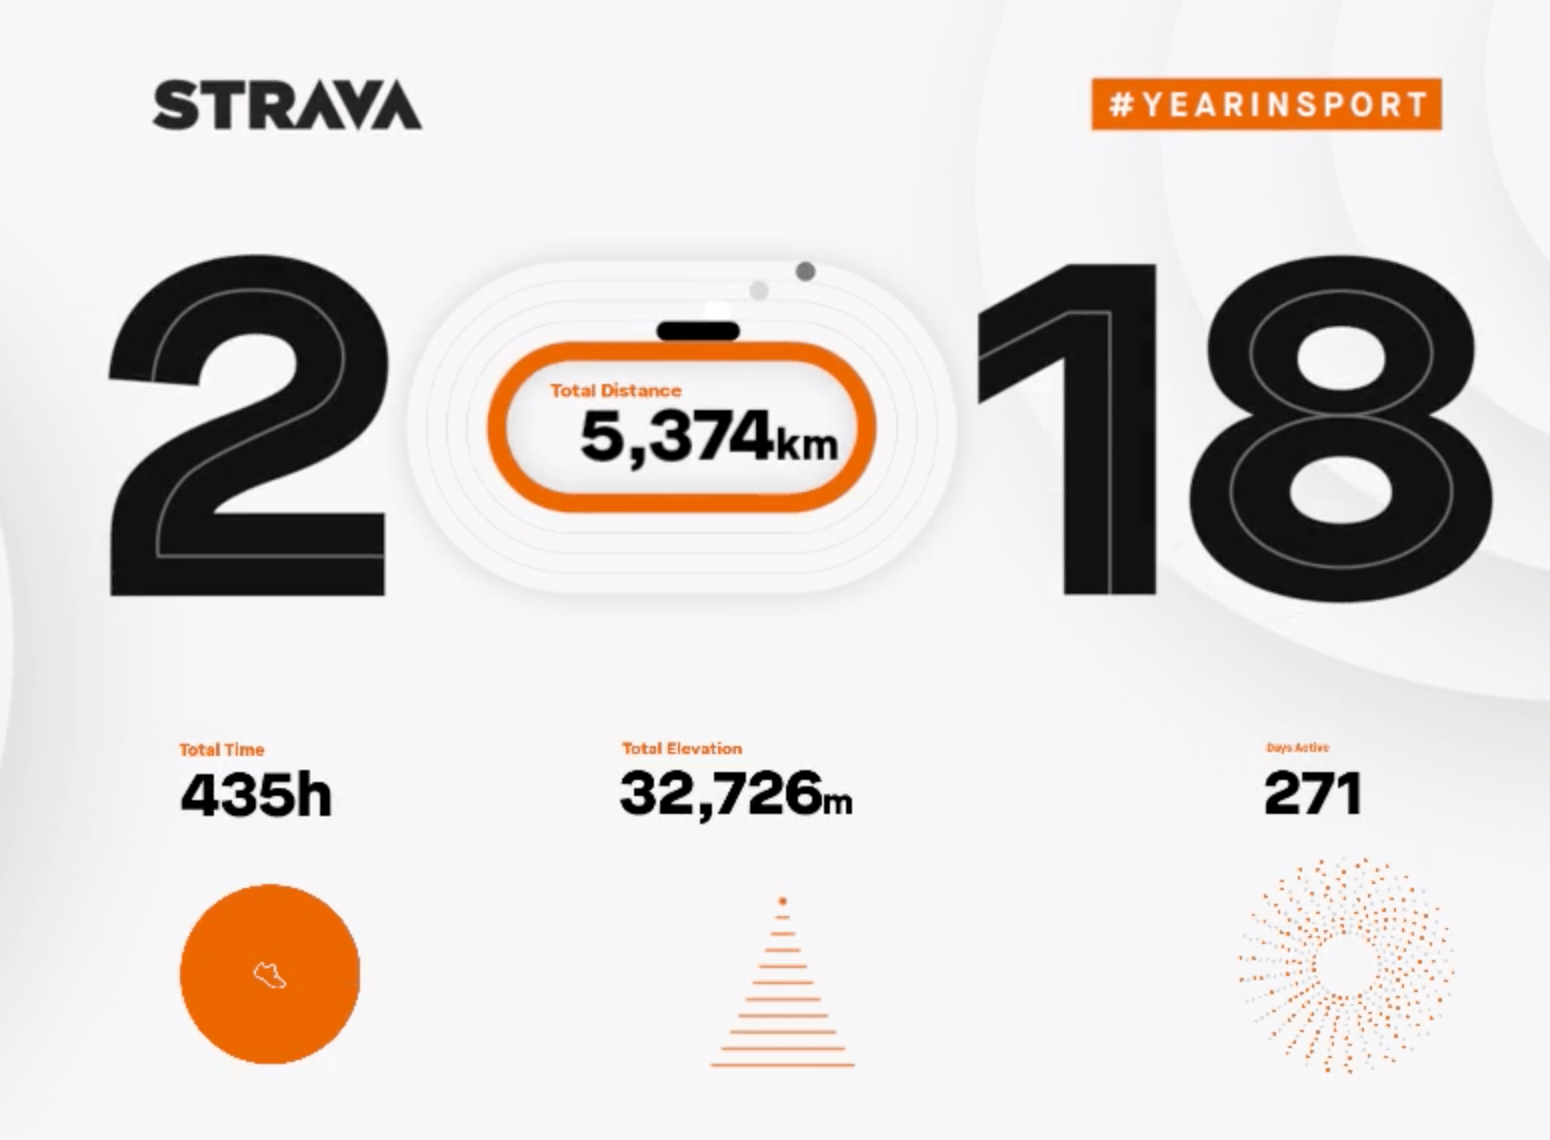 2018 Year in Sport Summary from Strava